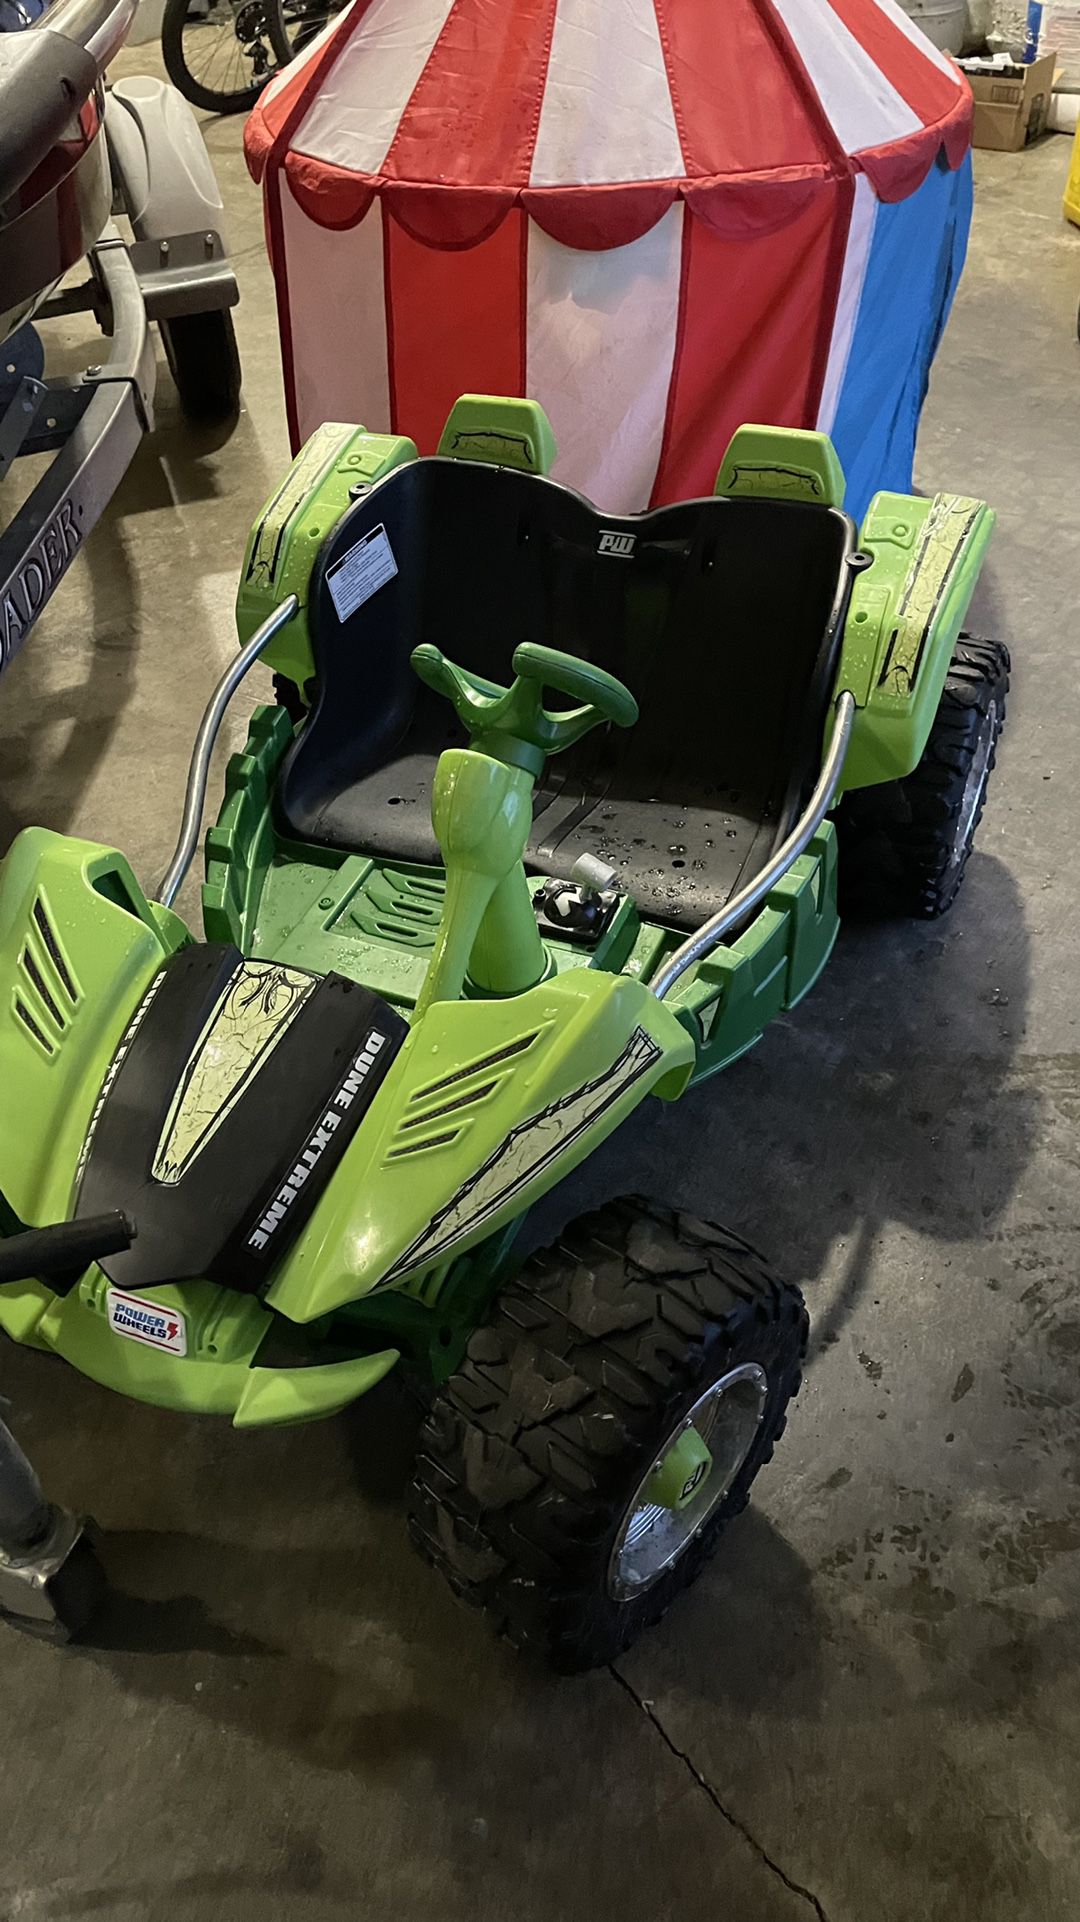 Free Electric Toddler Toy Car